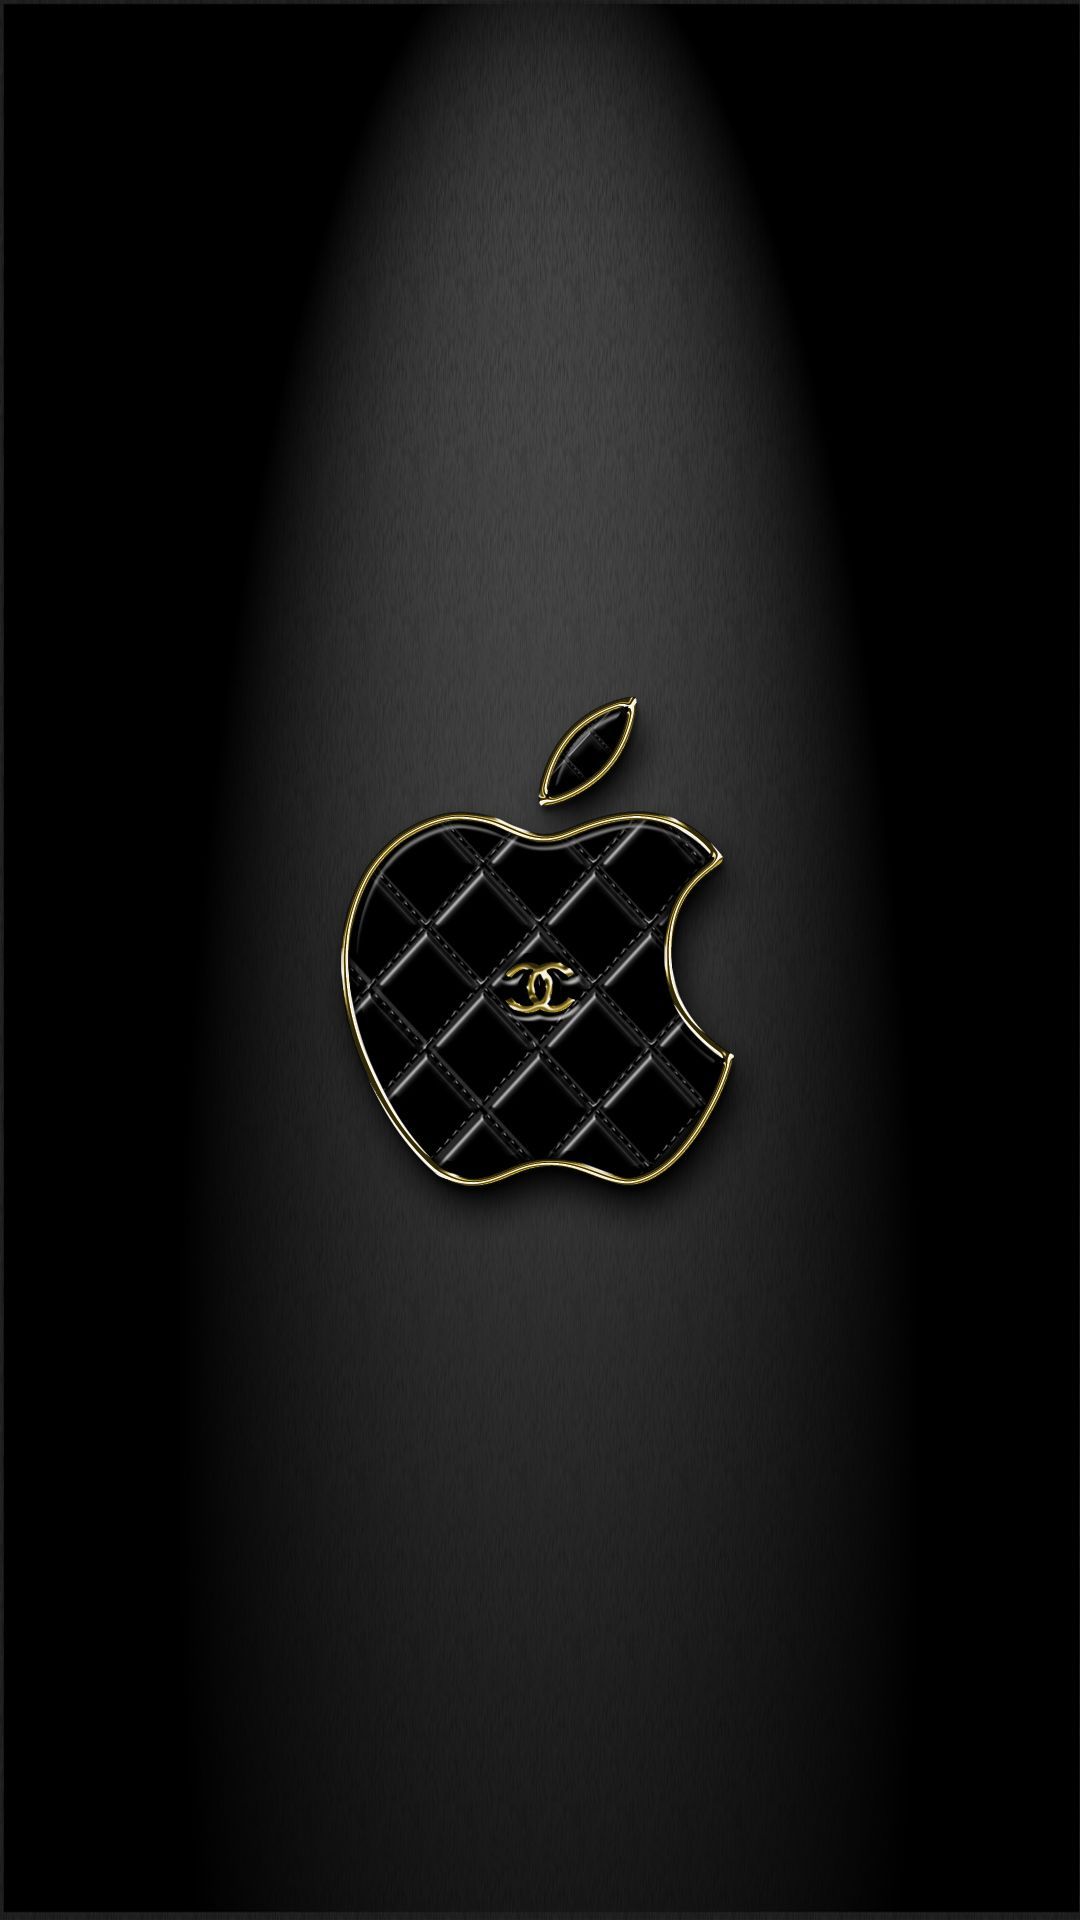 List of Latest Black Wallpaper for iPhone X Today. アップルの壁紙, ホーム画面の壁紙, iPhone 用壁紙